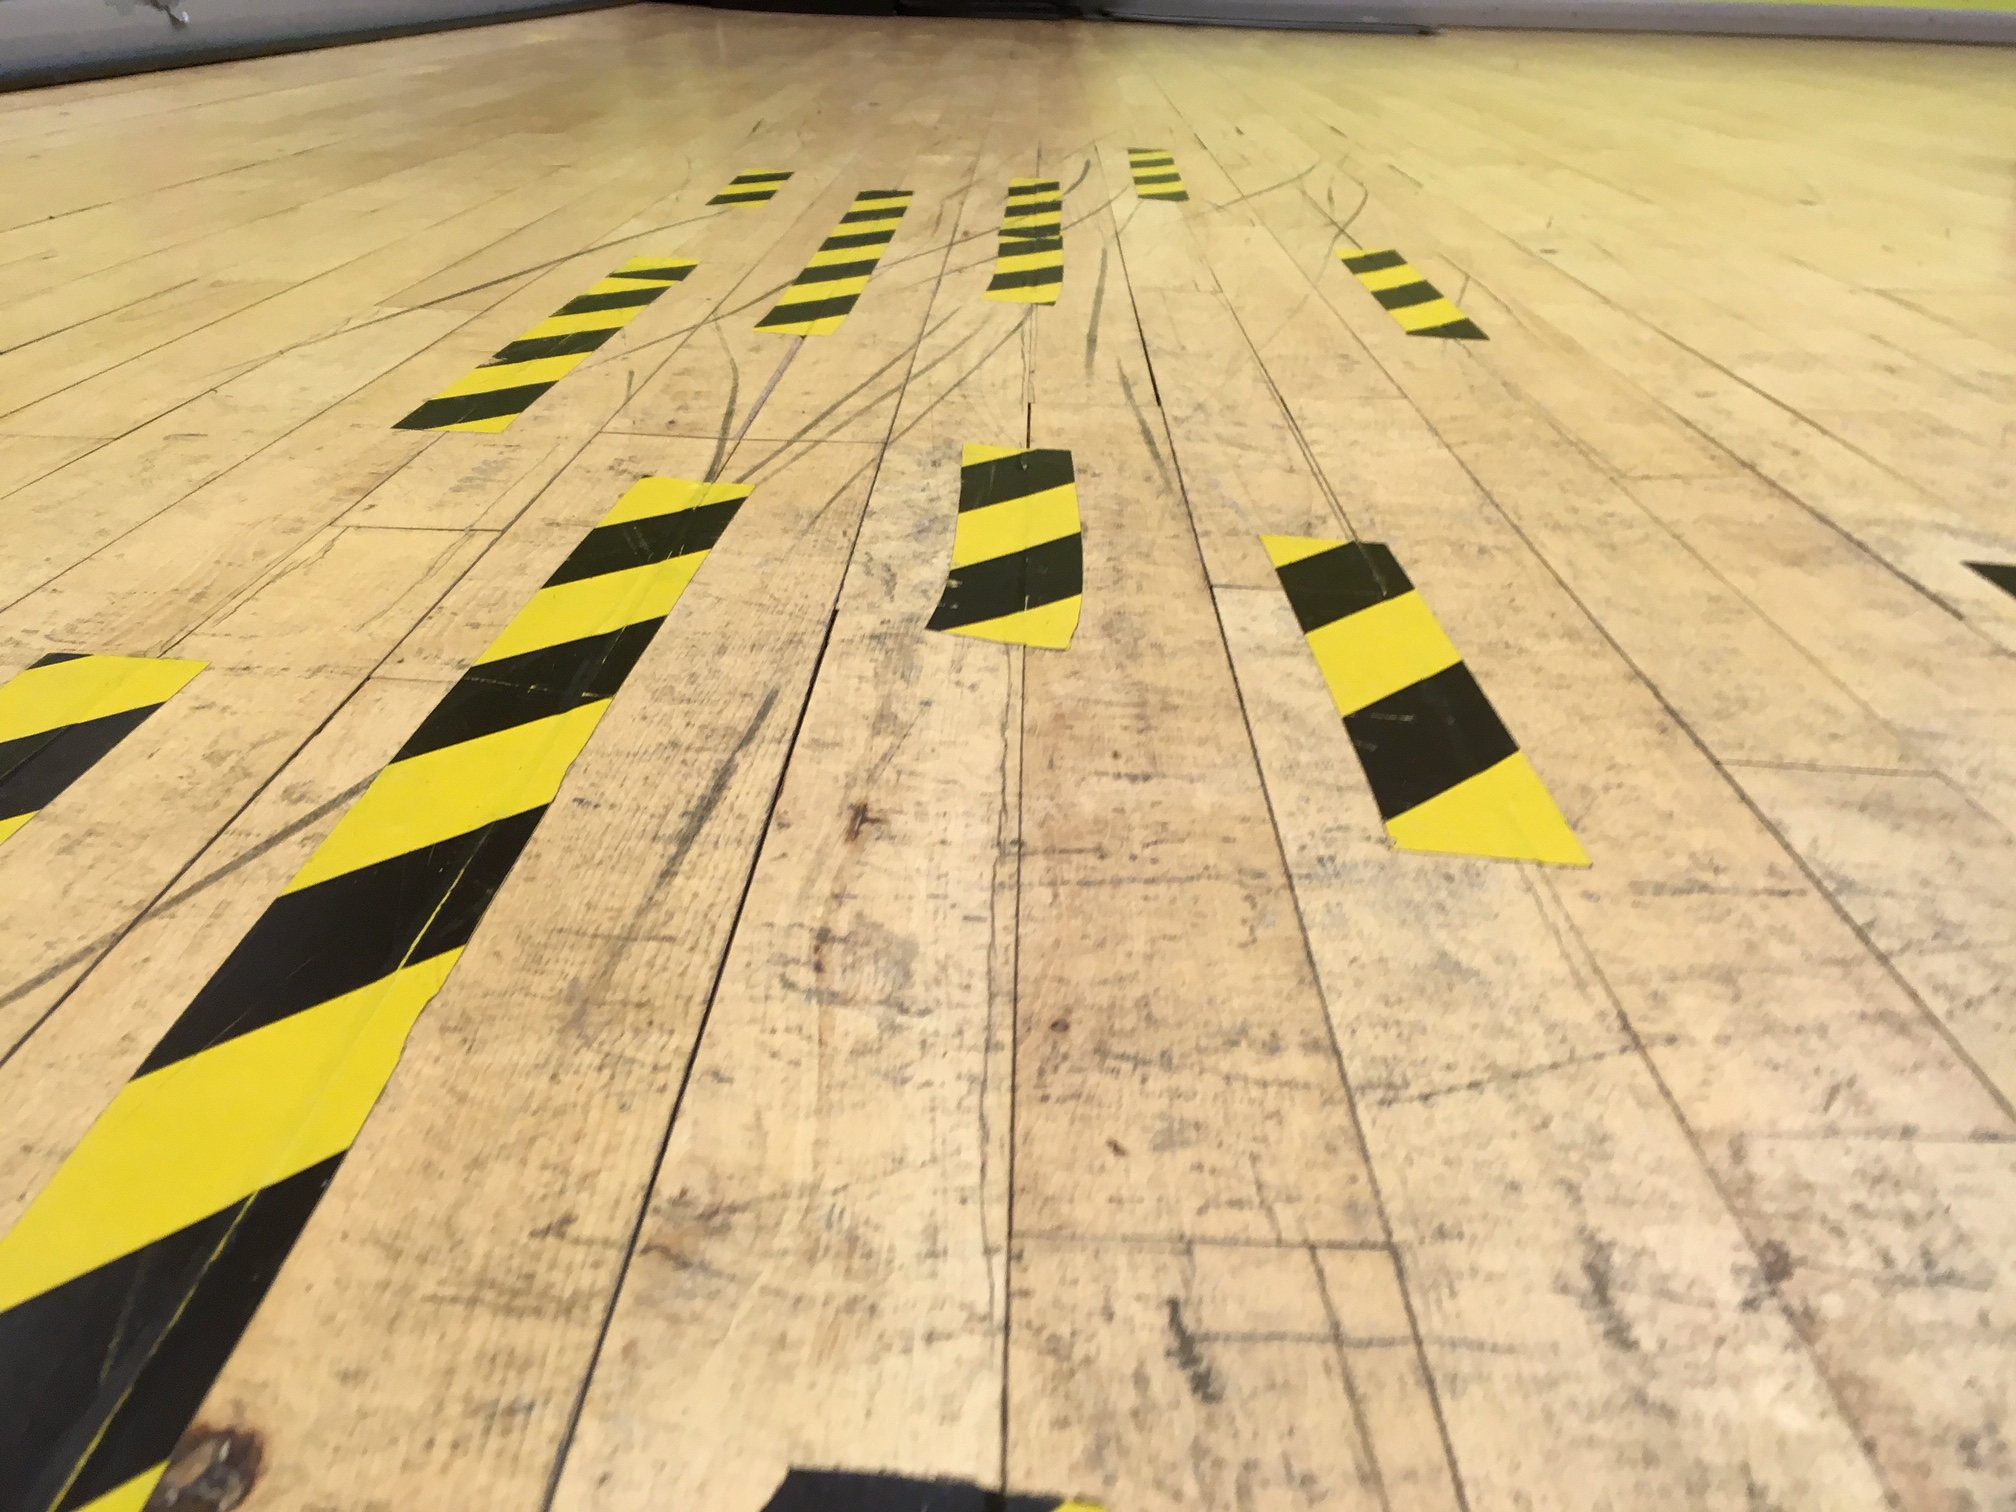 Leisure centre fitness studio floor before pulastic refurbishment by Sport Surfaces UK